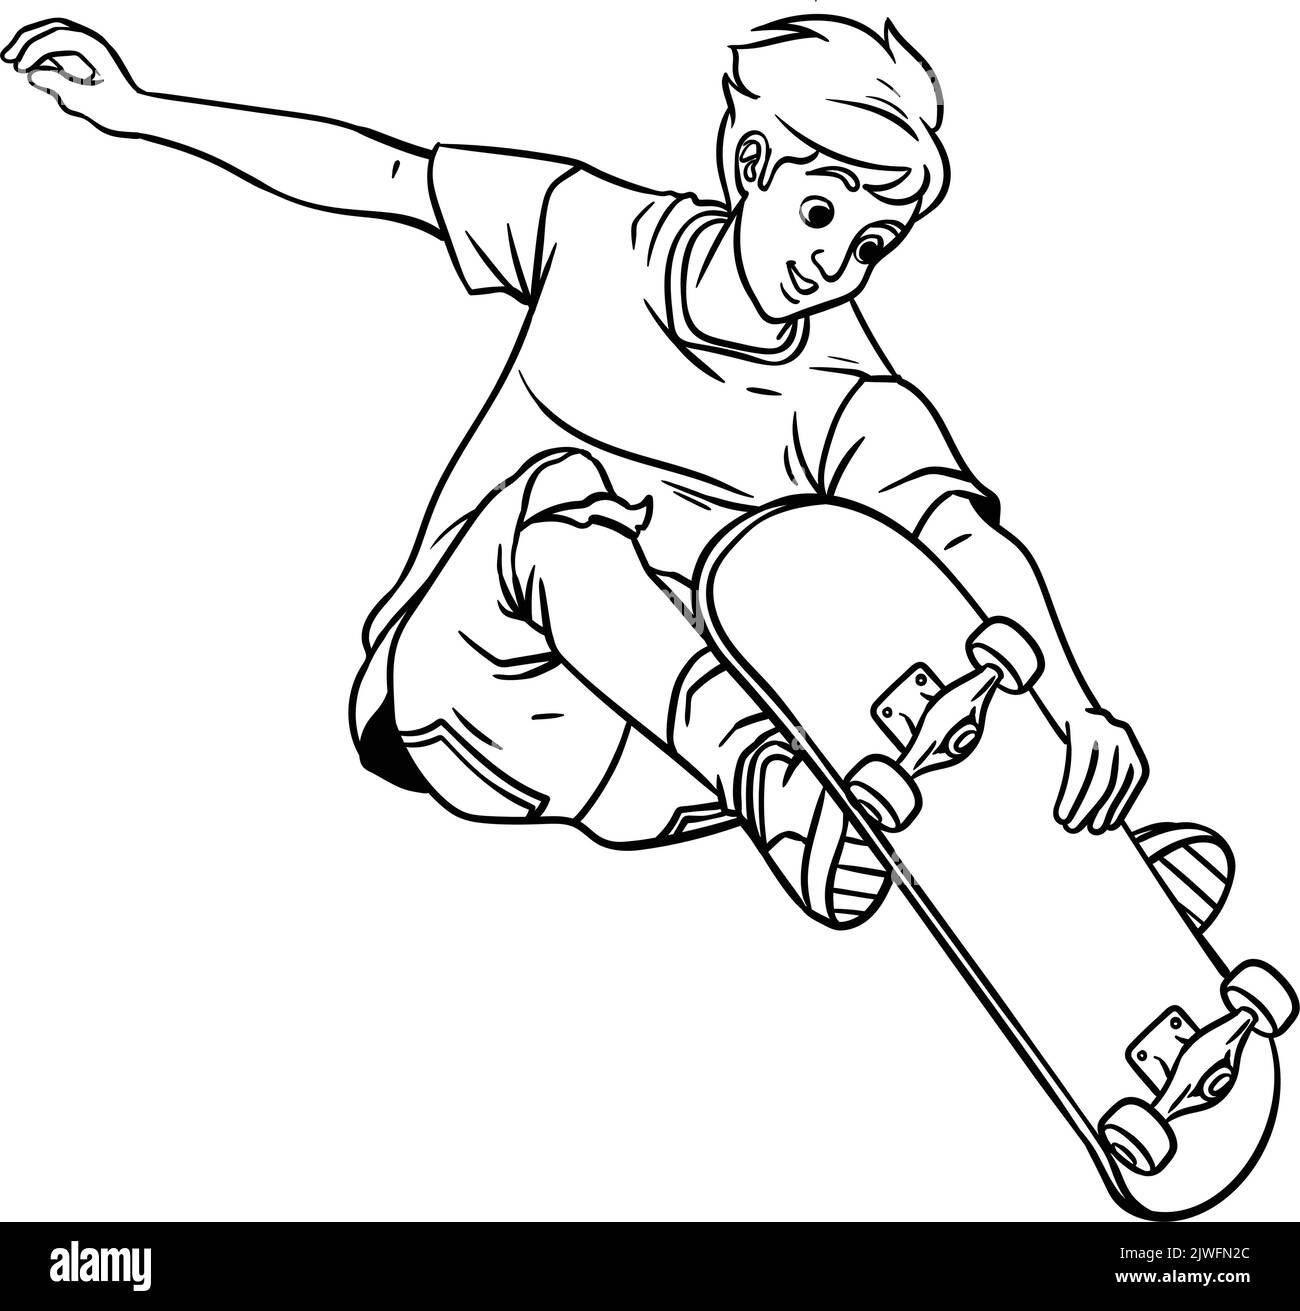 Dibujo de skater fotografías e imágenes de alta resolución - Alamy